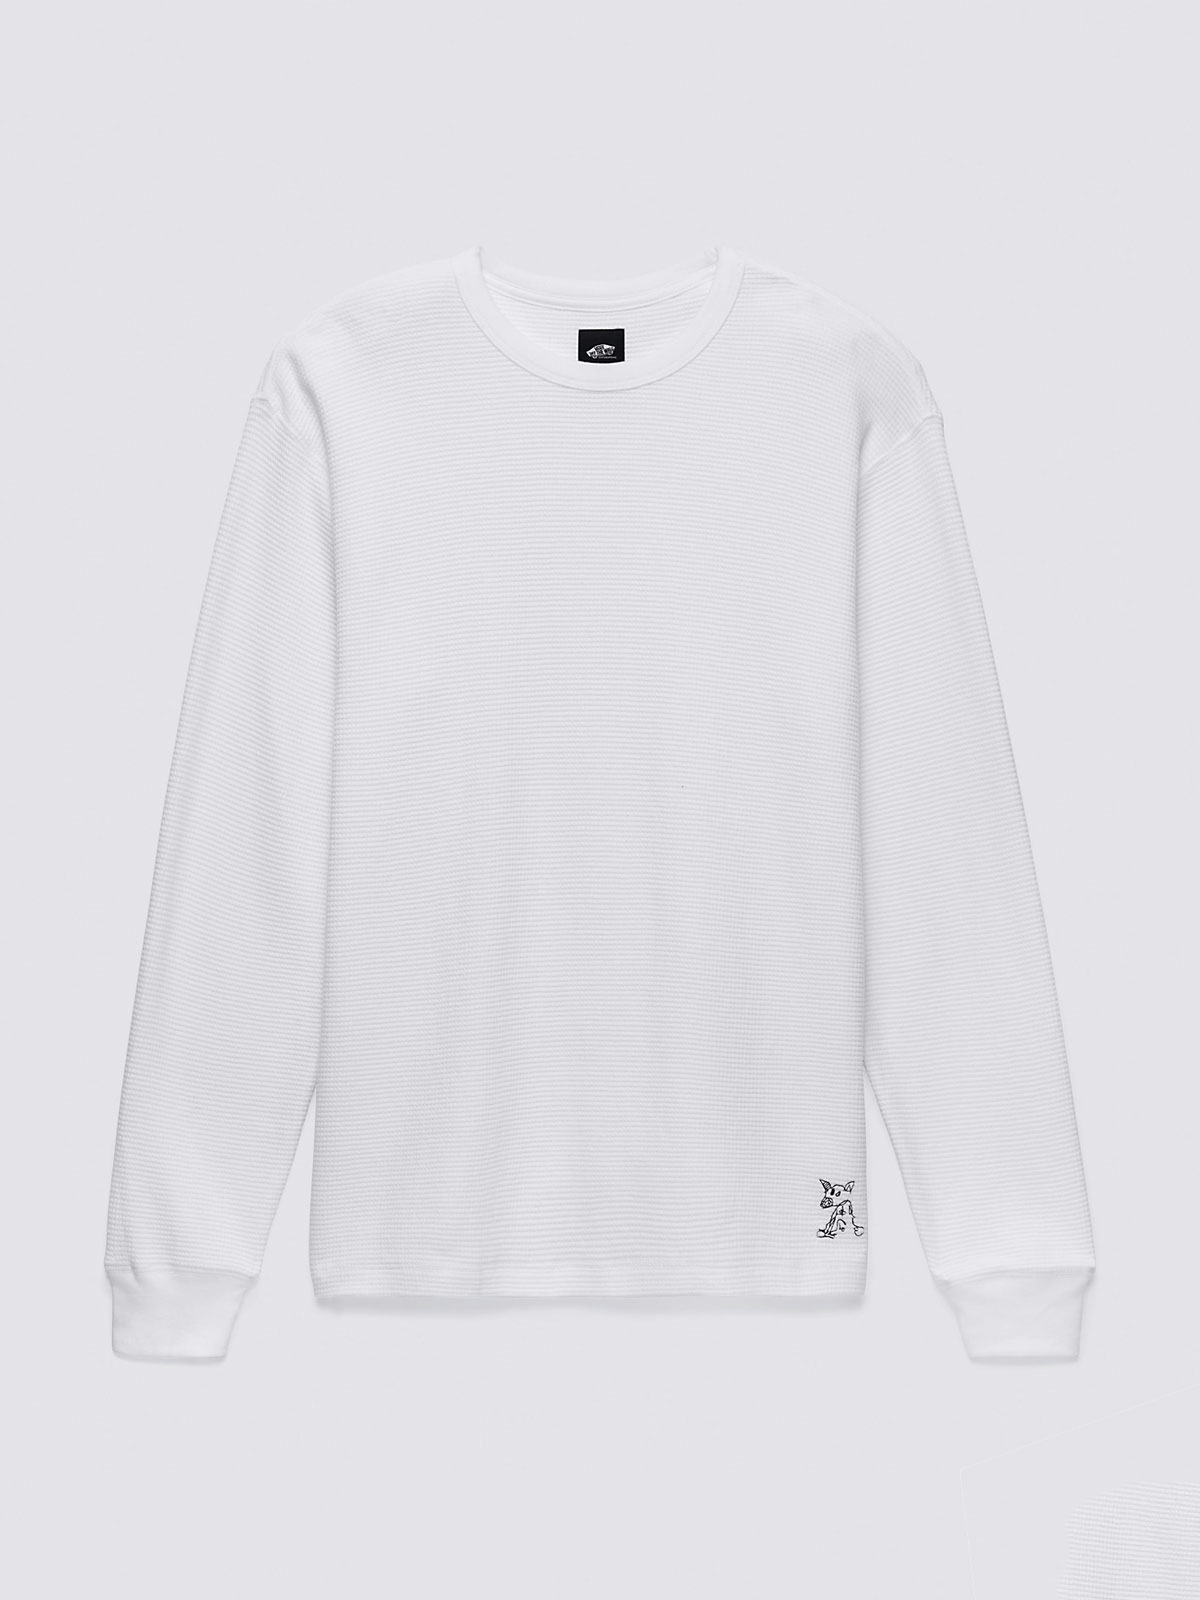 Vans Nick Michel Thermal Long Sleeve T-shirt White 1